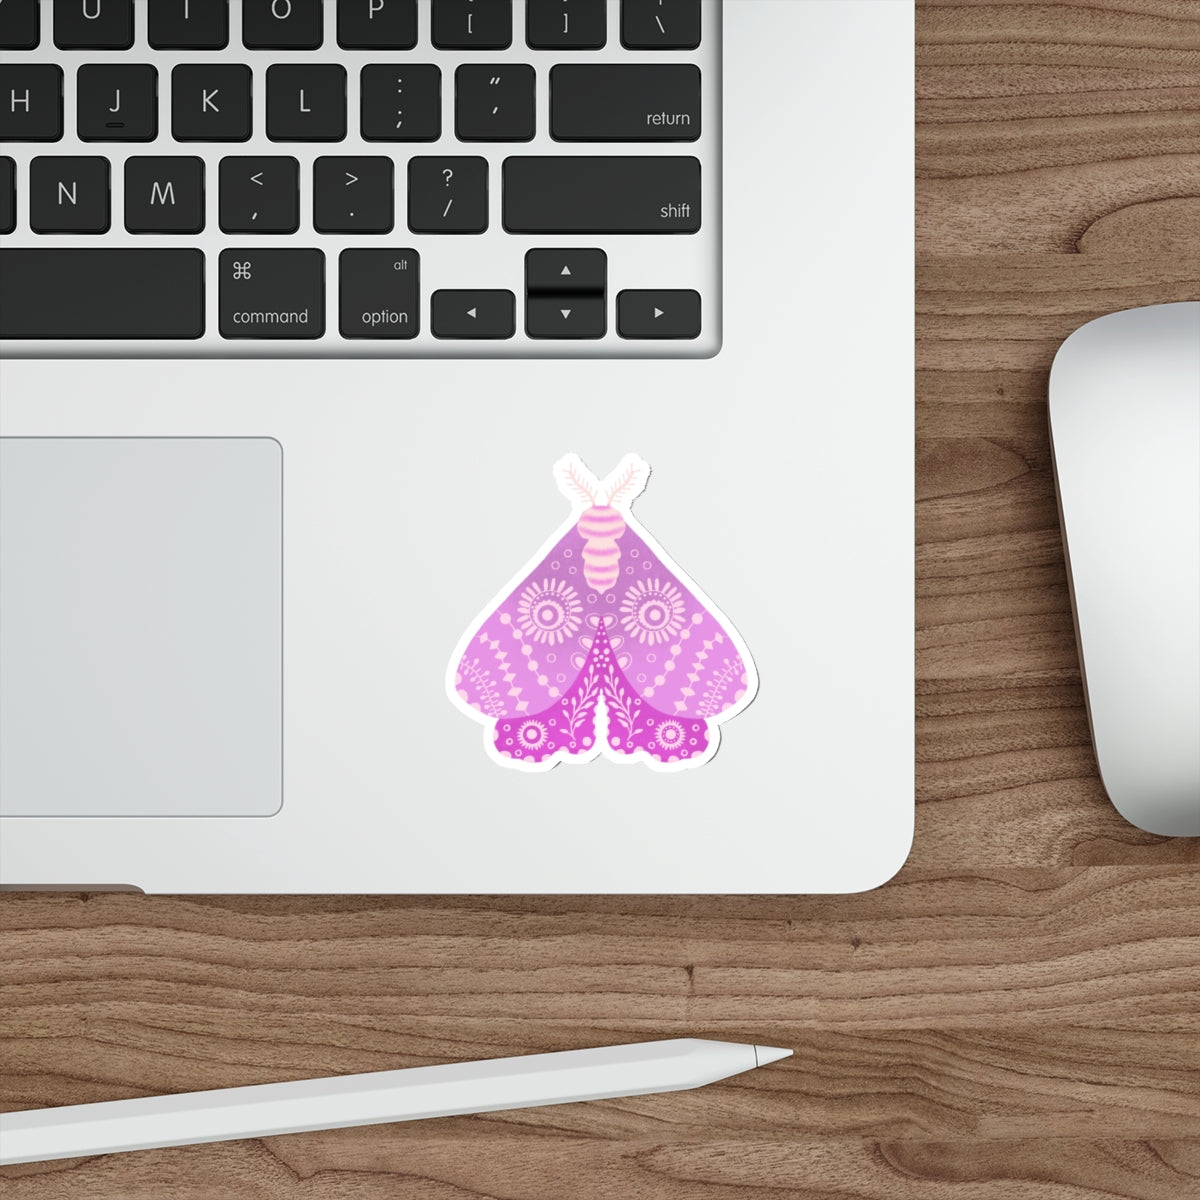 Folk Art Moth in Violet and Lavender Die Cut Sticker